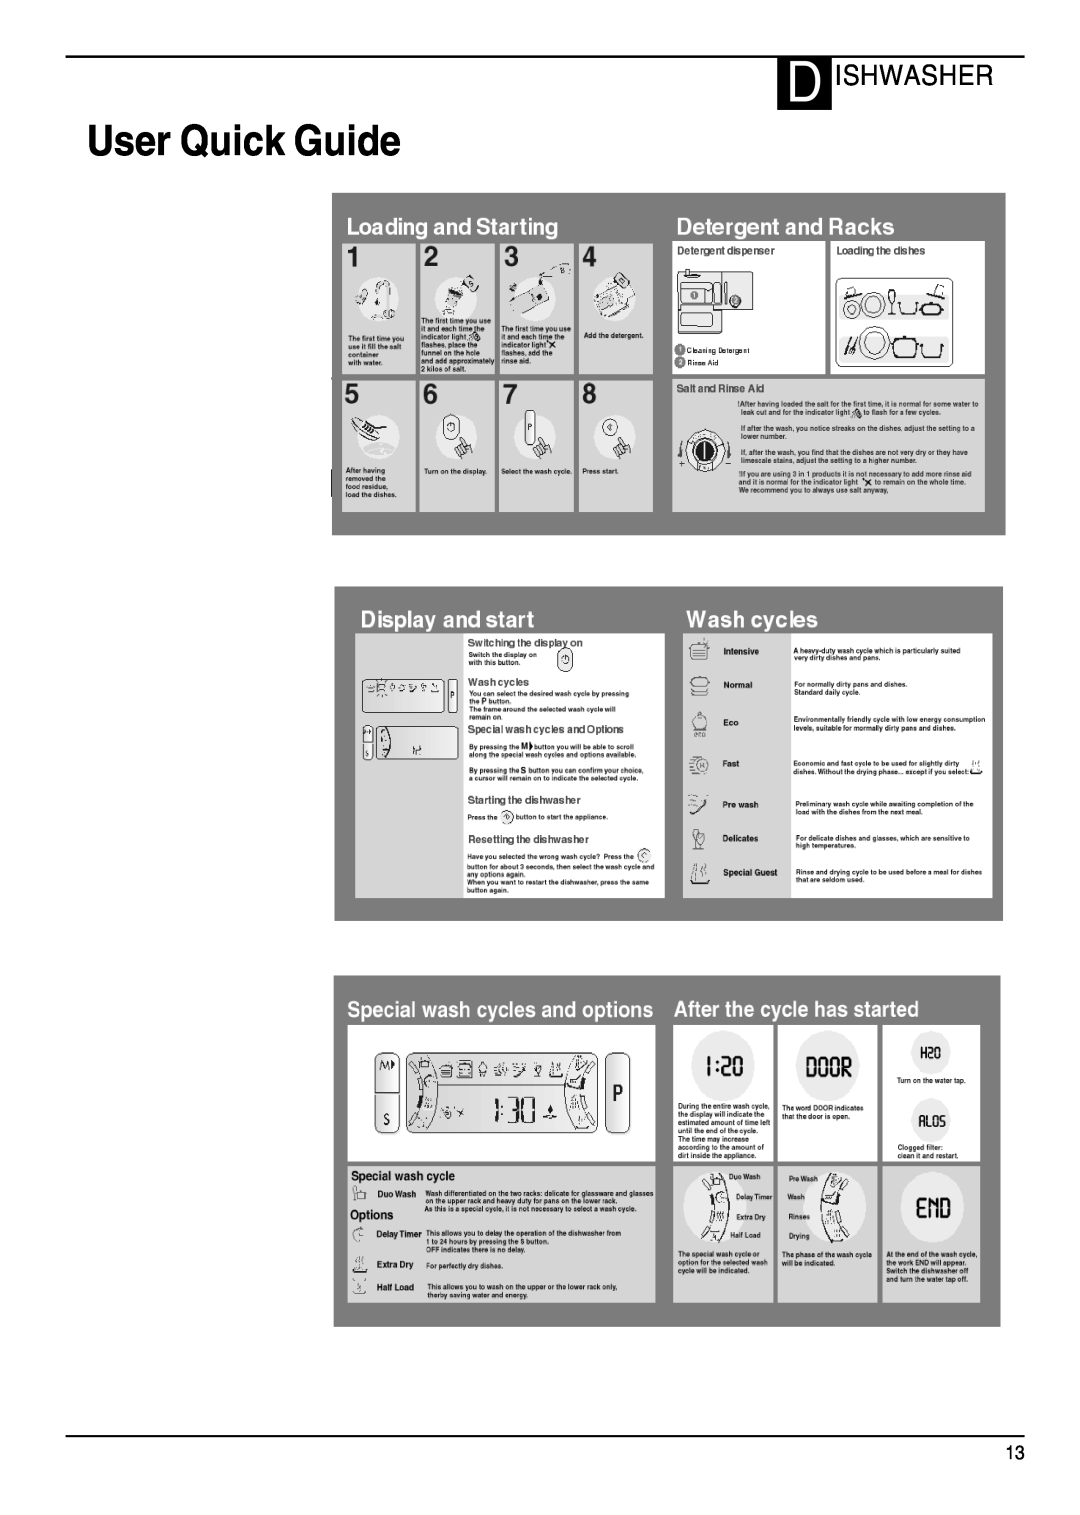 Hotpoint DWF70, DWM75 manual User Quick Guide, D Ishwasher 